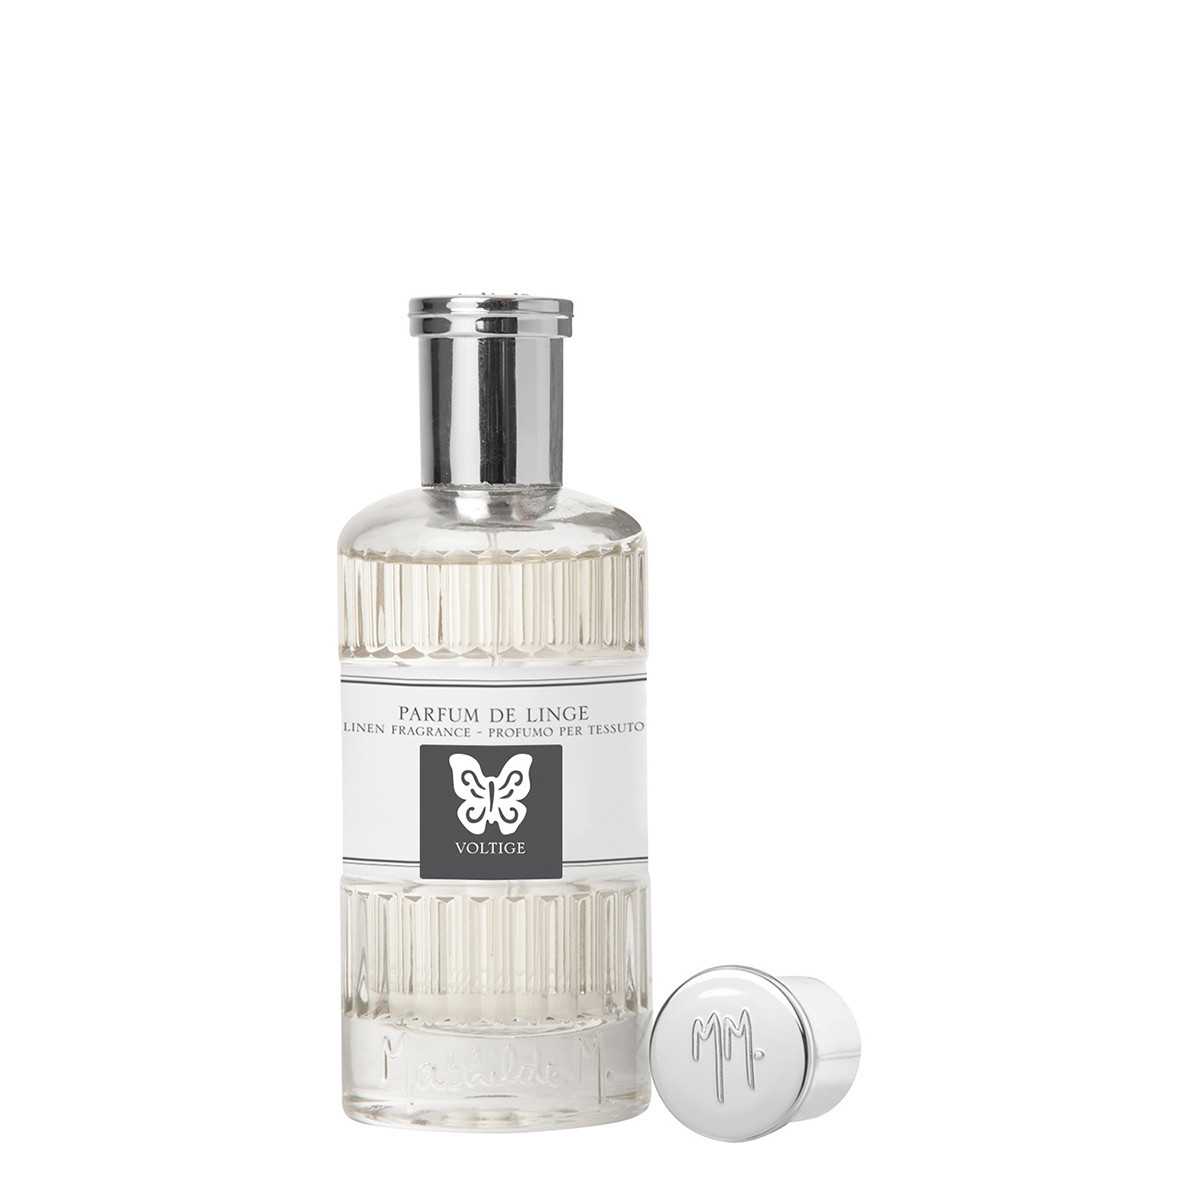 Perfume de lino 75 ml - Acrobacias aéreas